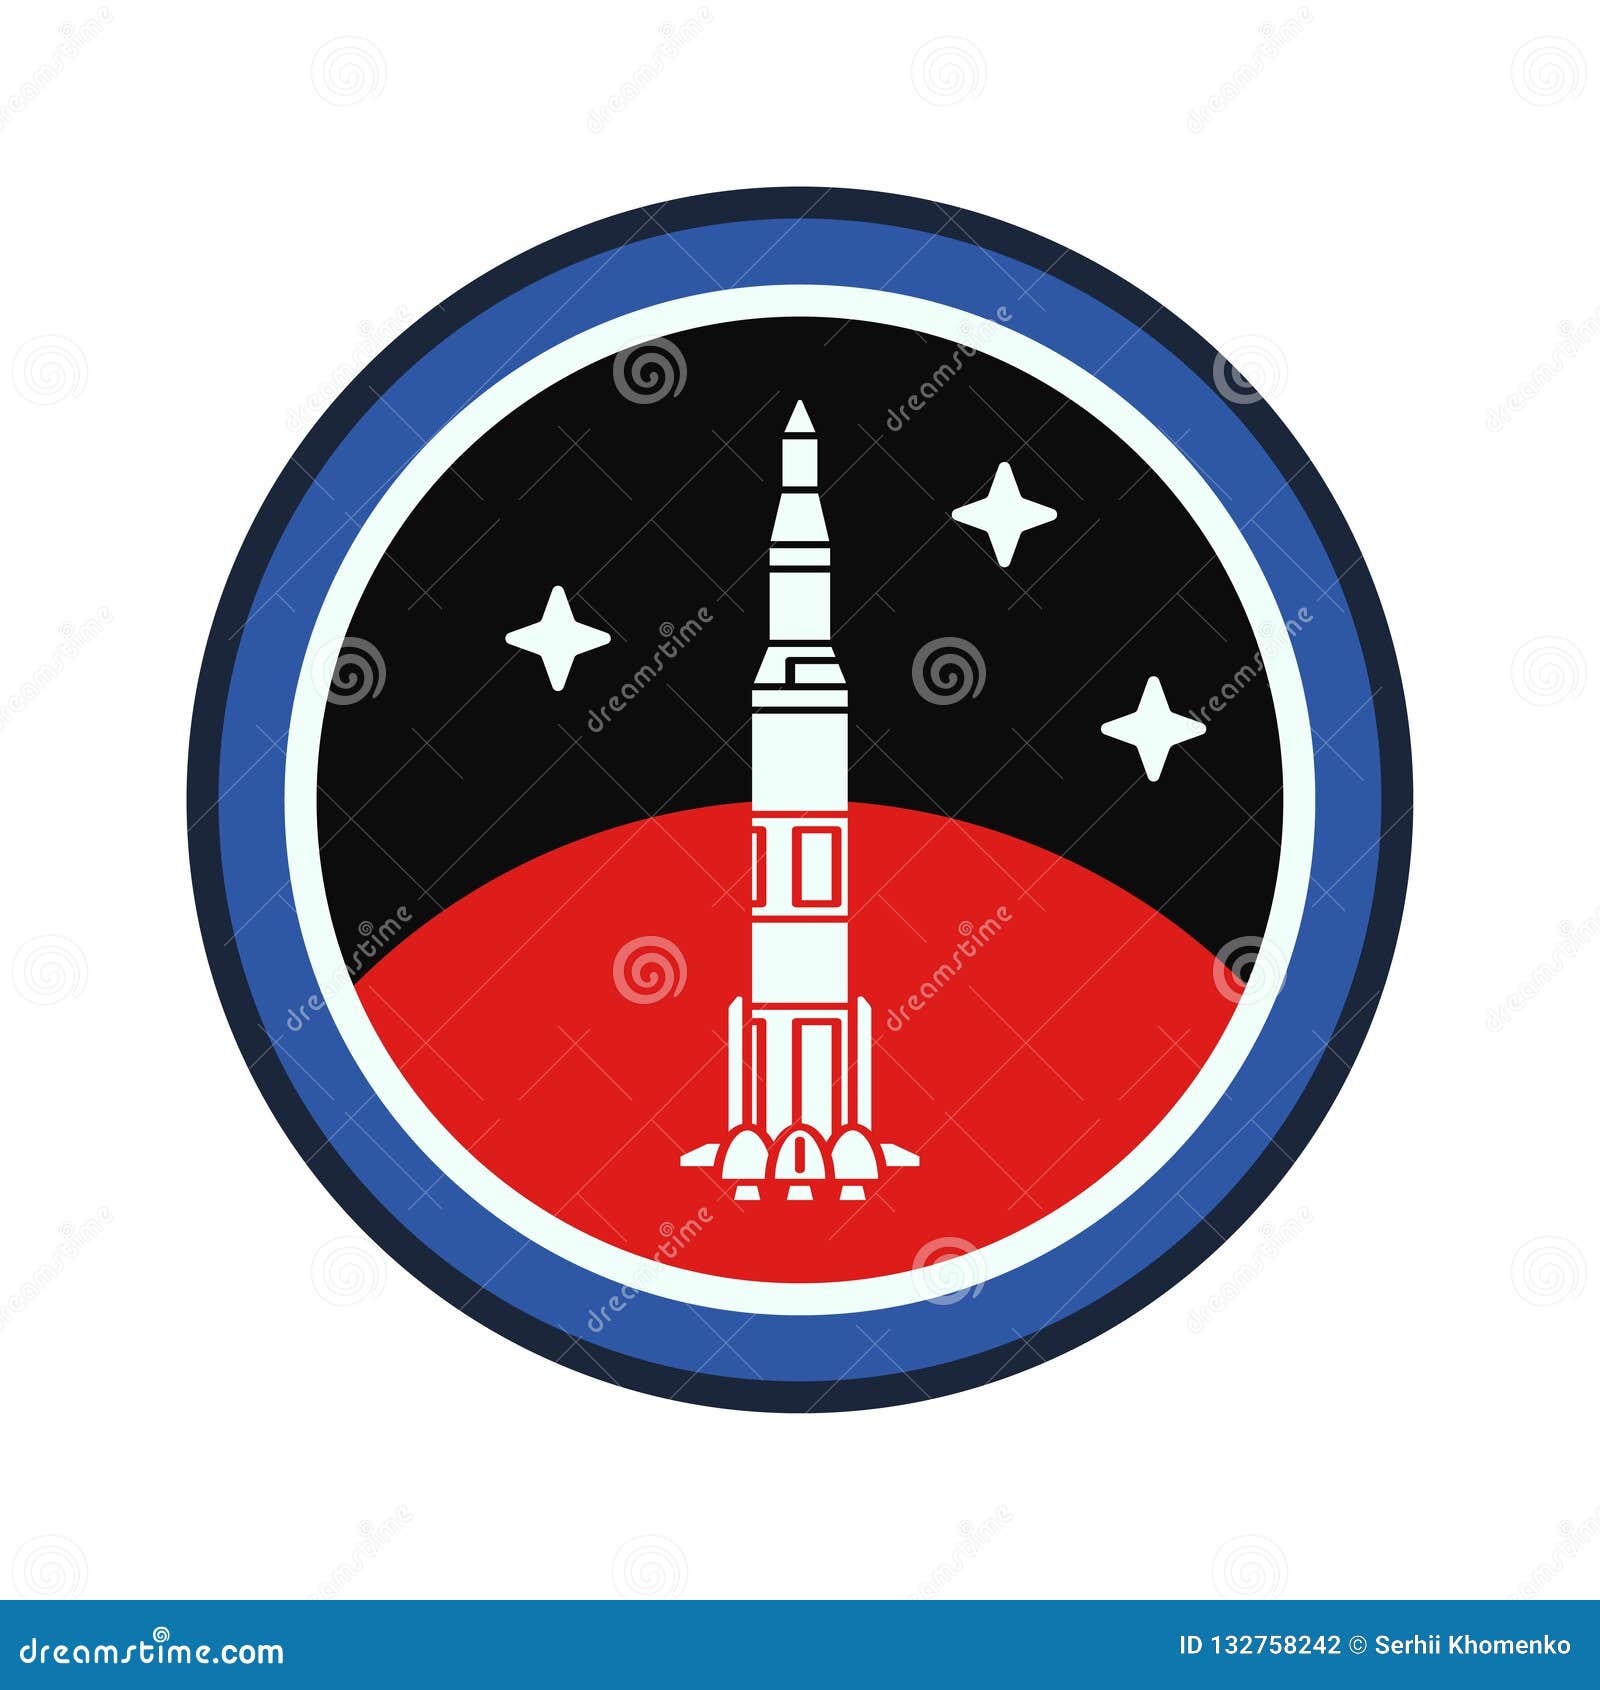 Circle Stripe Silhouette Vector Logo Of Aerospace Mars Program